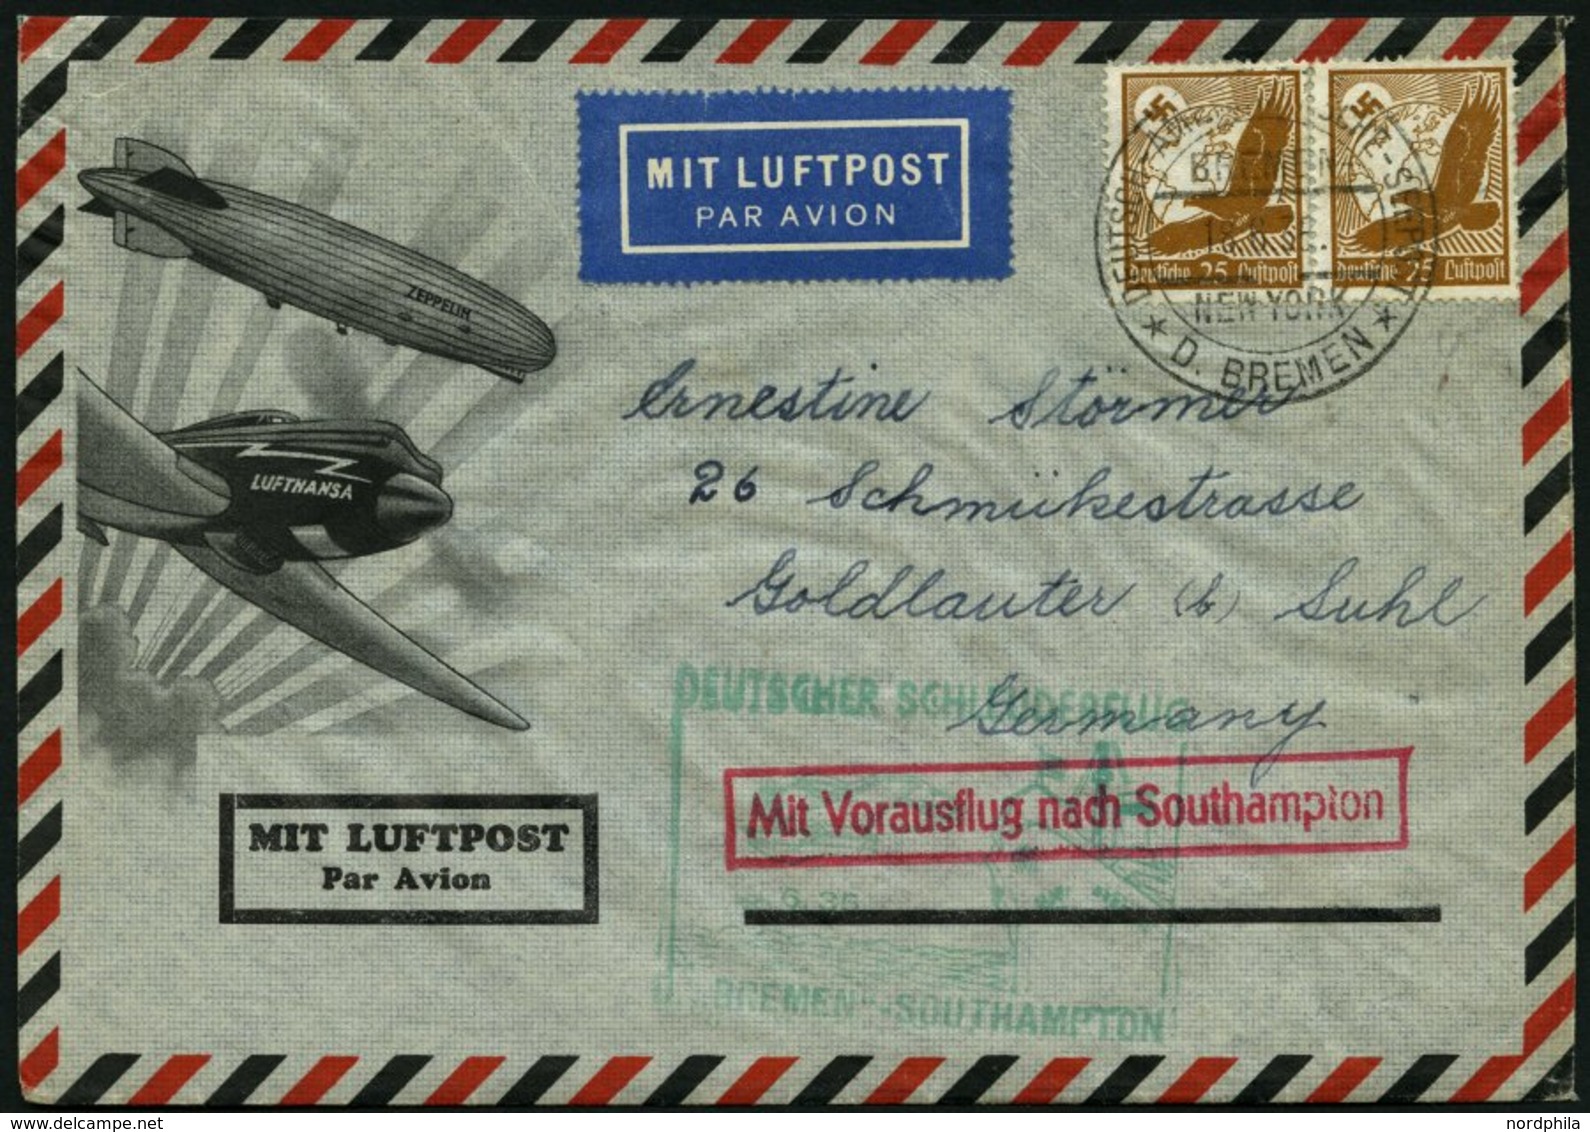 KATAPULTPOST 194c BRIEF, 19.6.1935, &quot,Bremen&quot, - Southampton, Deutsche Seepostaufgabe, Prachtbrief - Covers & Documents